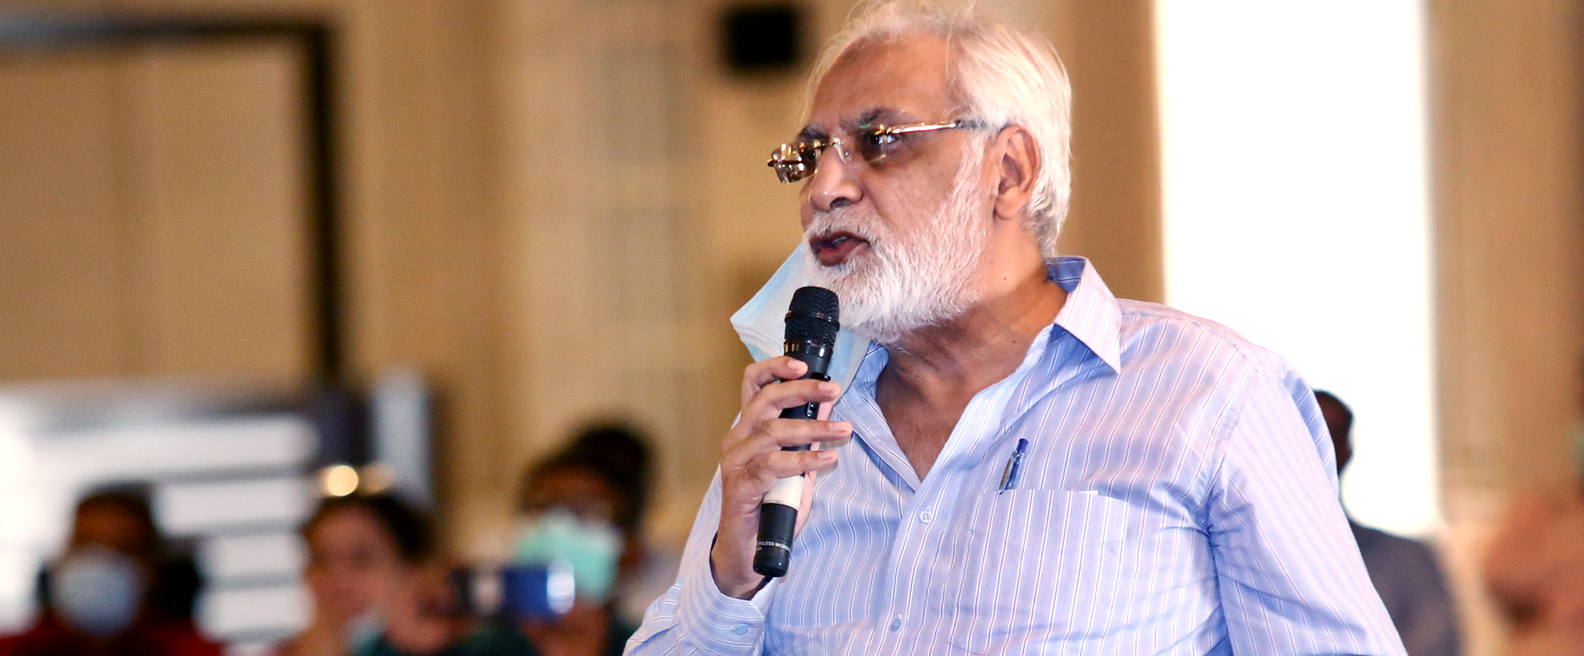 A shareholder raises a query at Annual General Meeting 2020 in Karachi